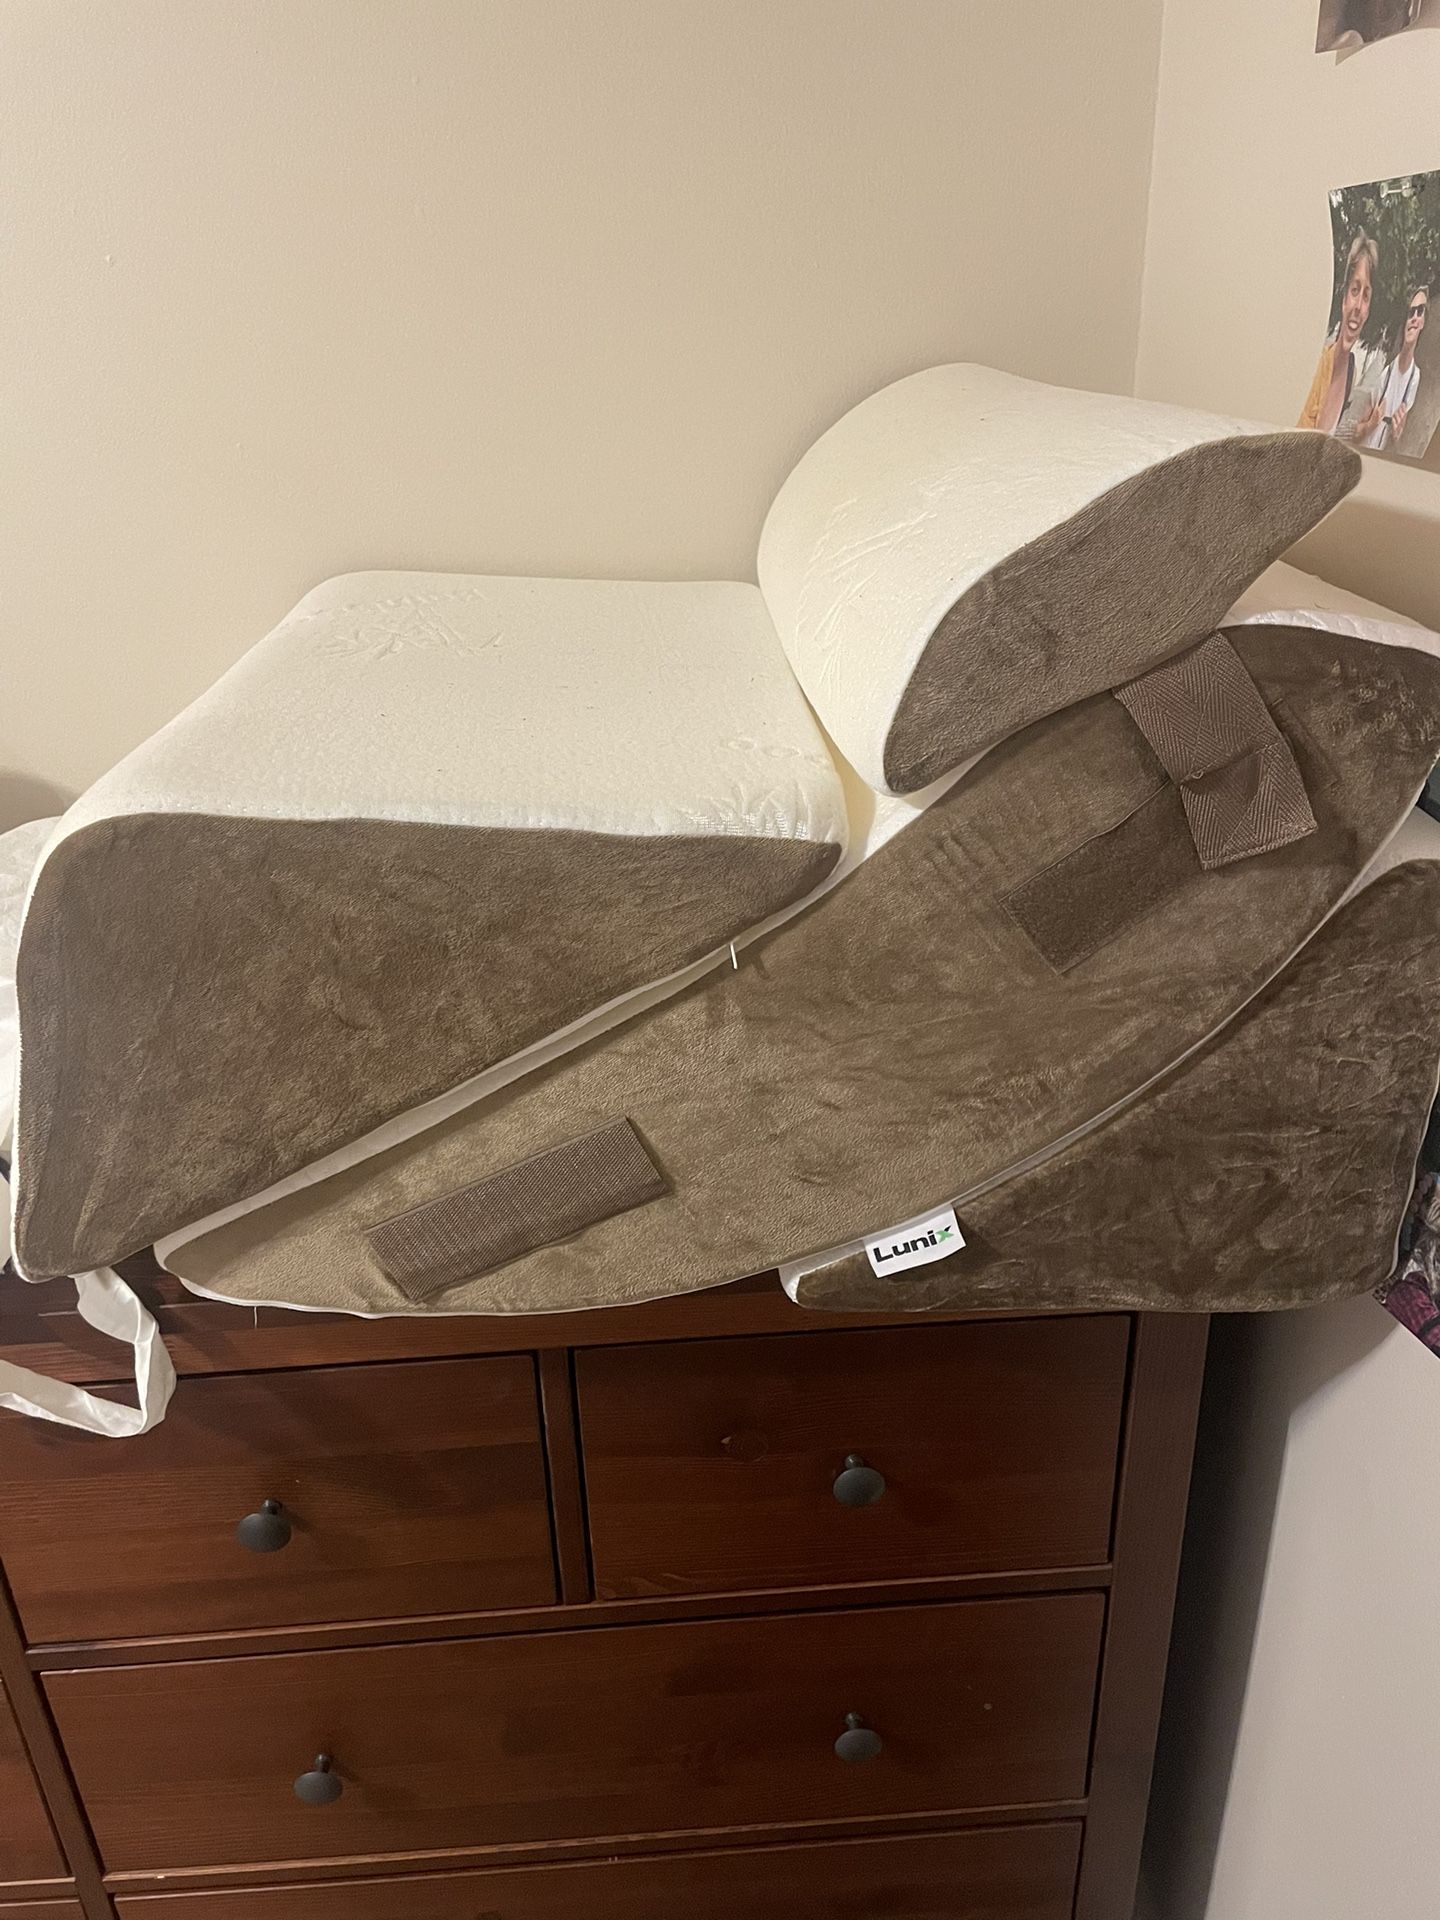 Lunix Orthopedic Memory Foam Pillow System